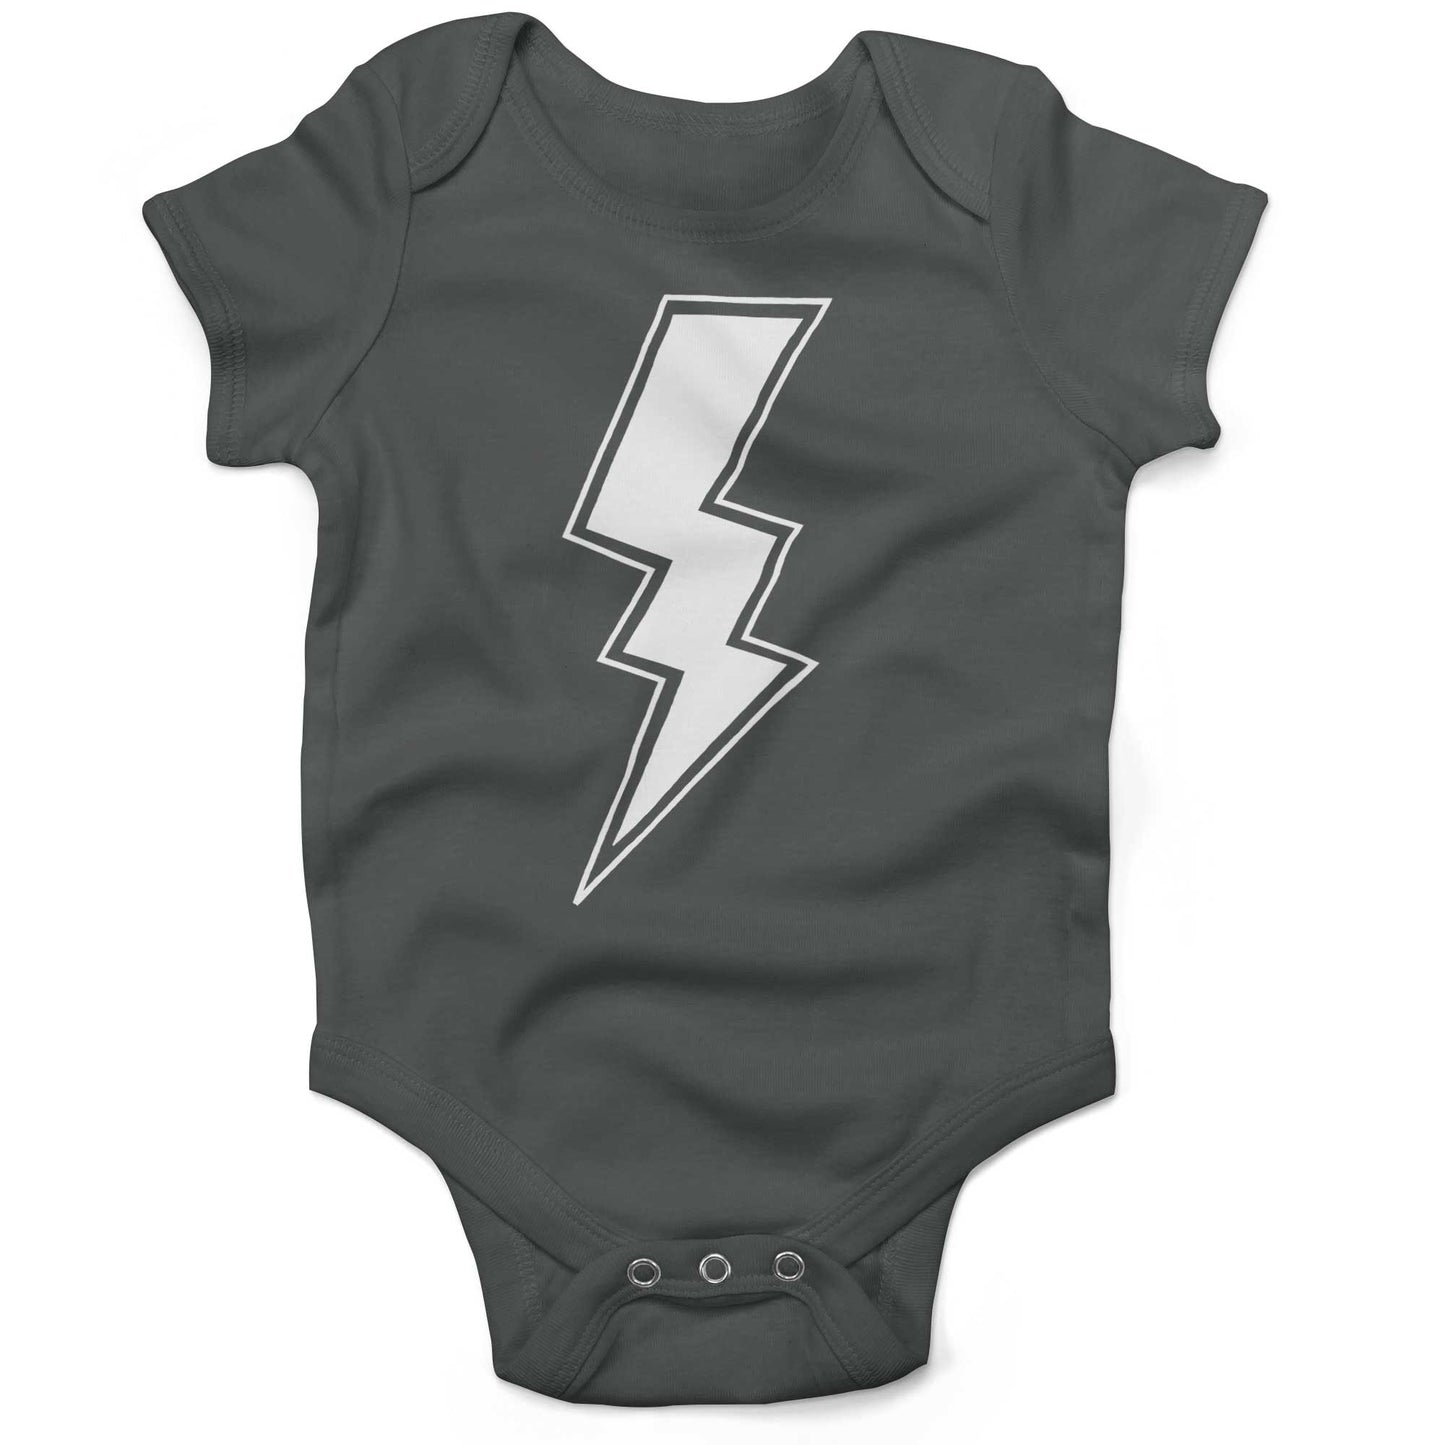 Giant Lightning Bolt Infant Bodysuit or Raglan Baby Tee-Organic Asphalt-3-6 months